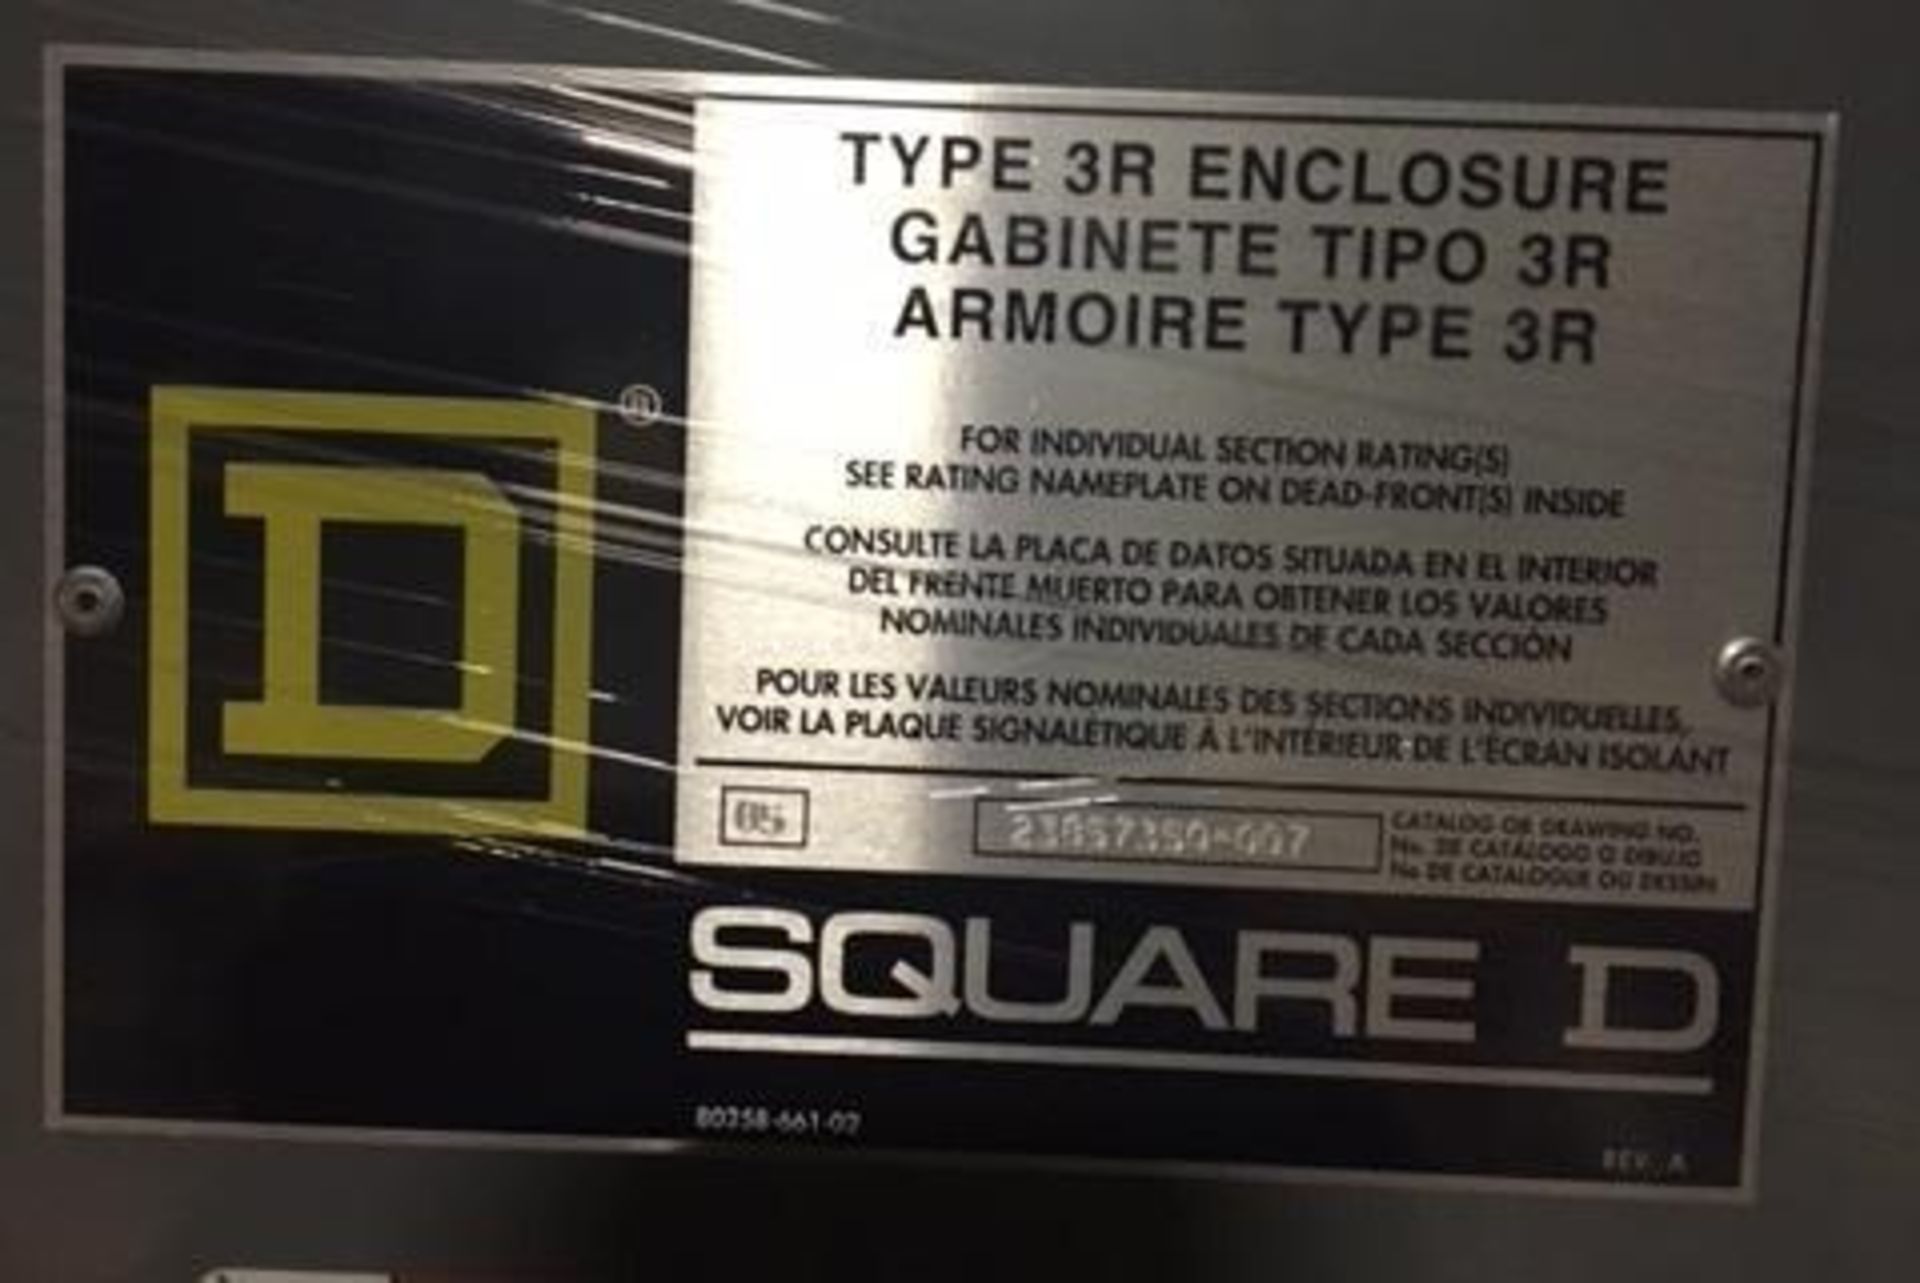 Square D Type 3R Enclosure (3793) - Image 3 of 3